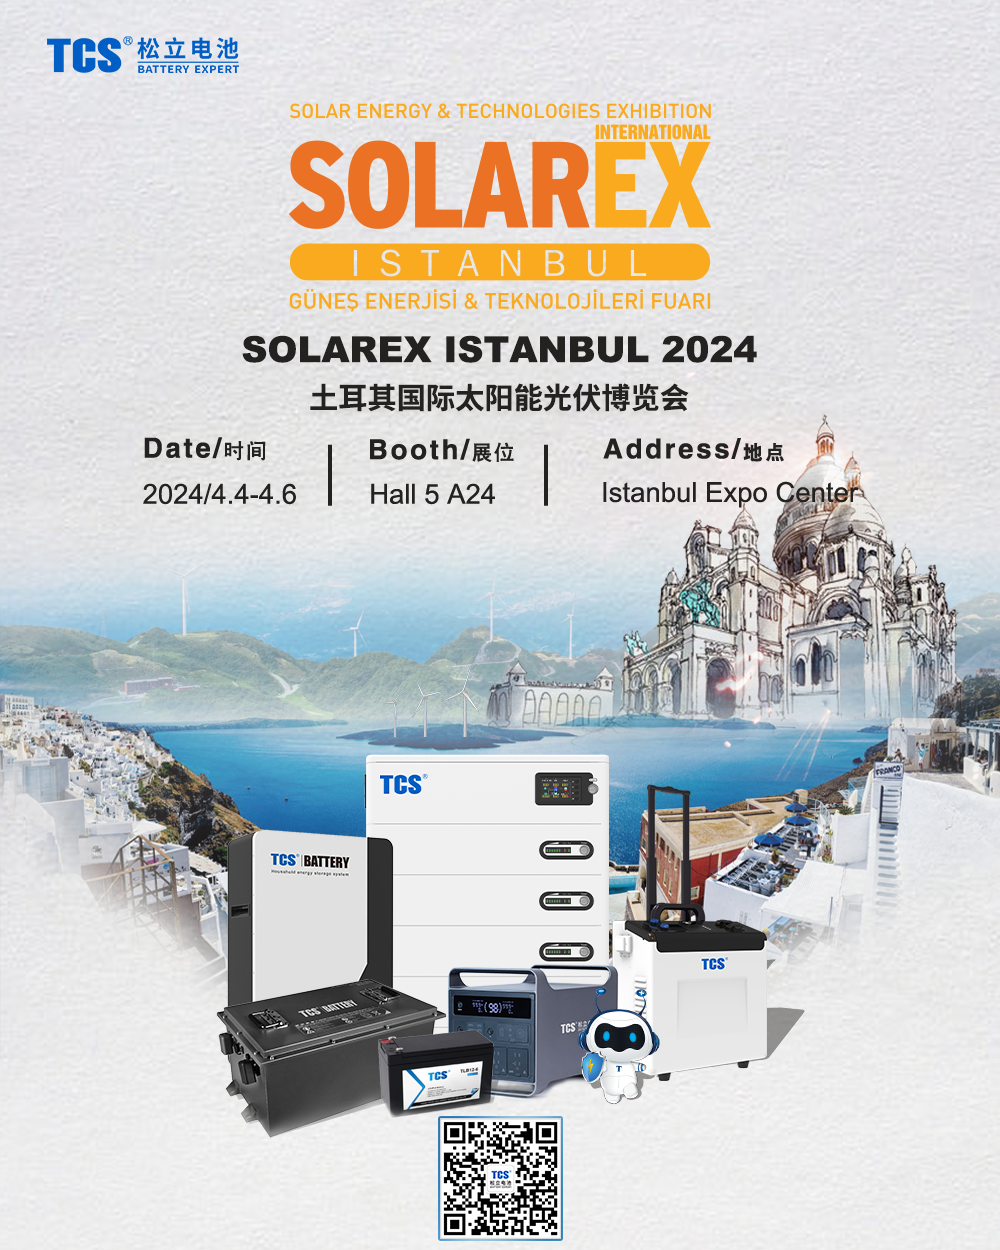 Solarex Istanbul 2024 зал 5 A24